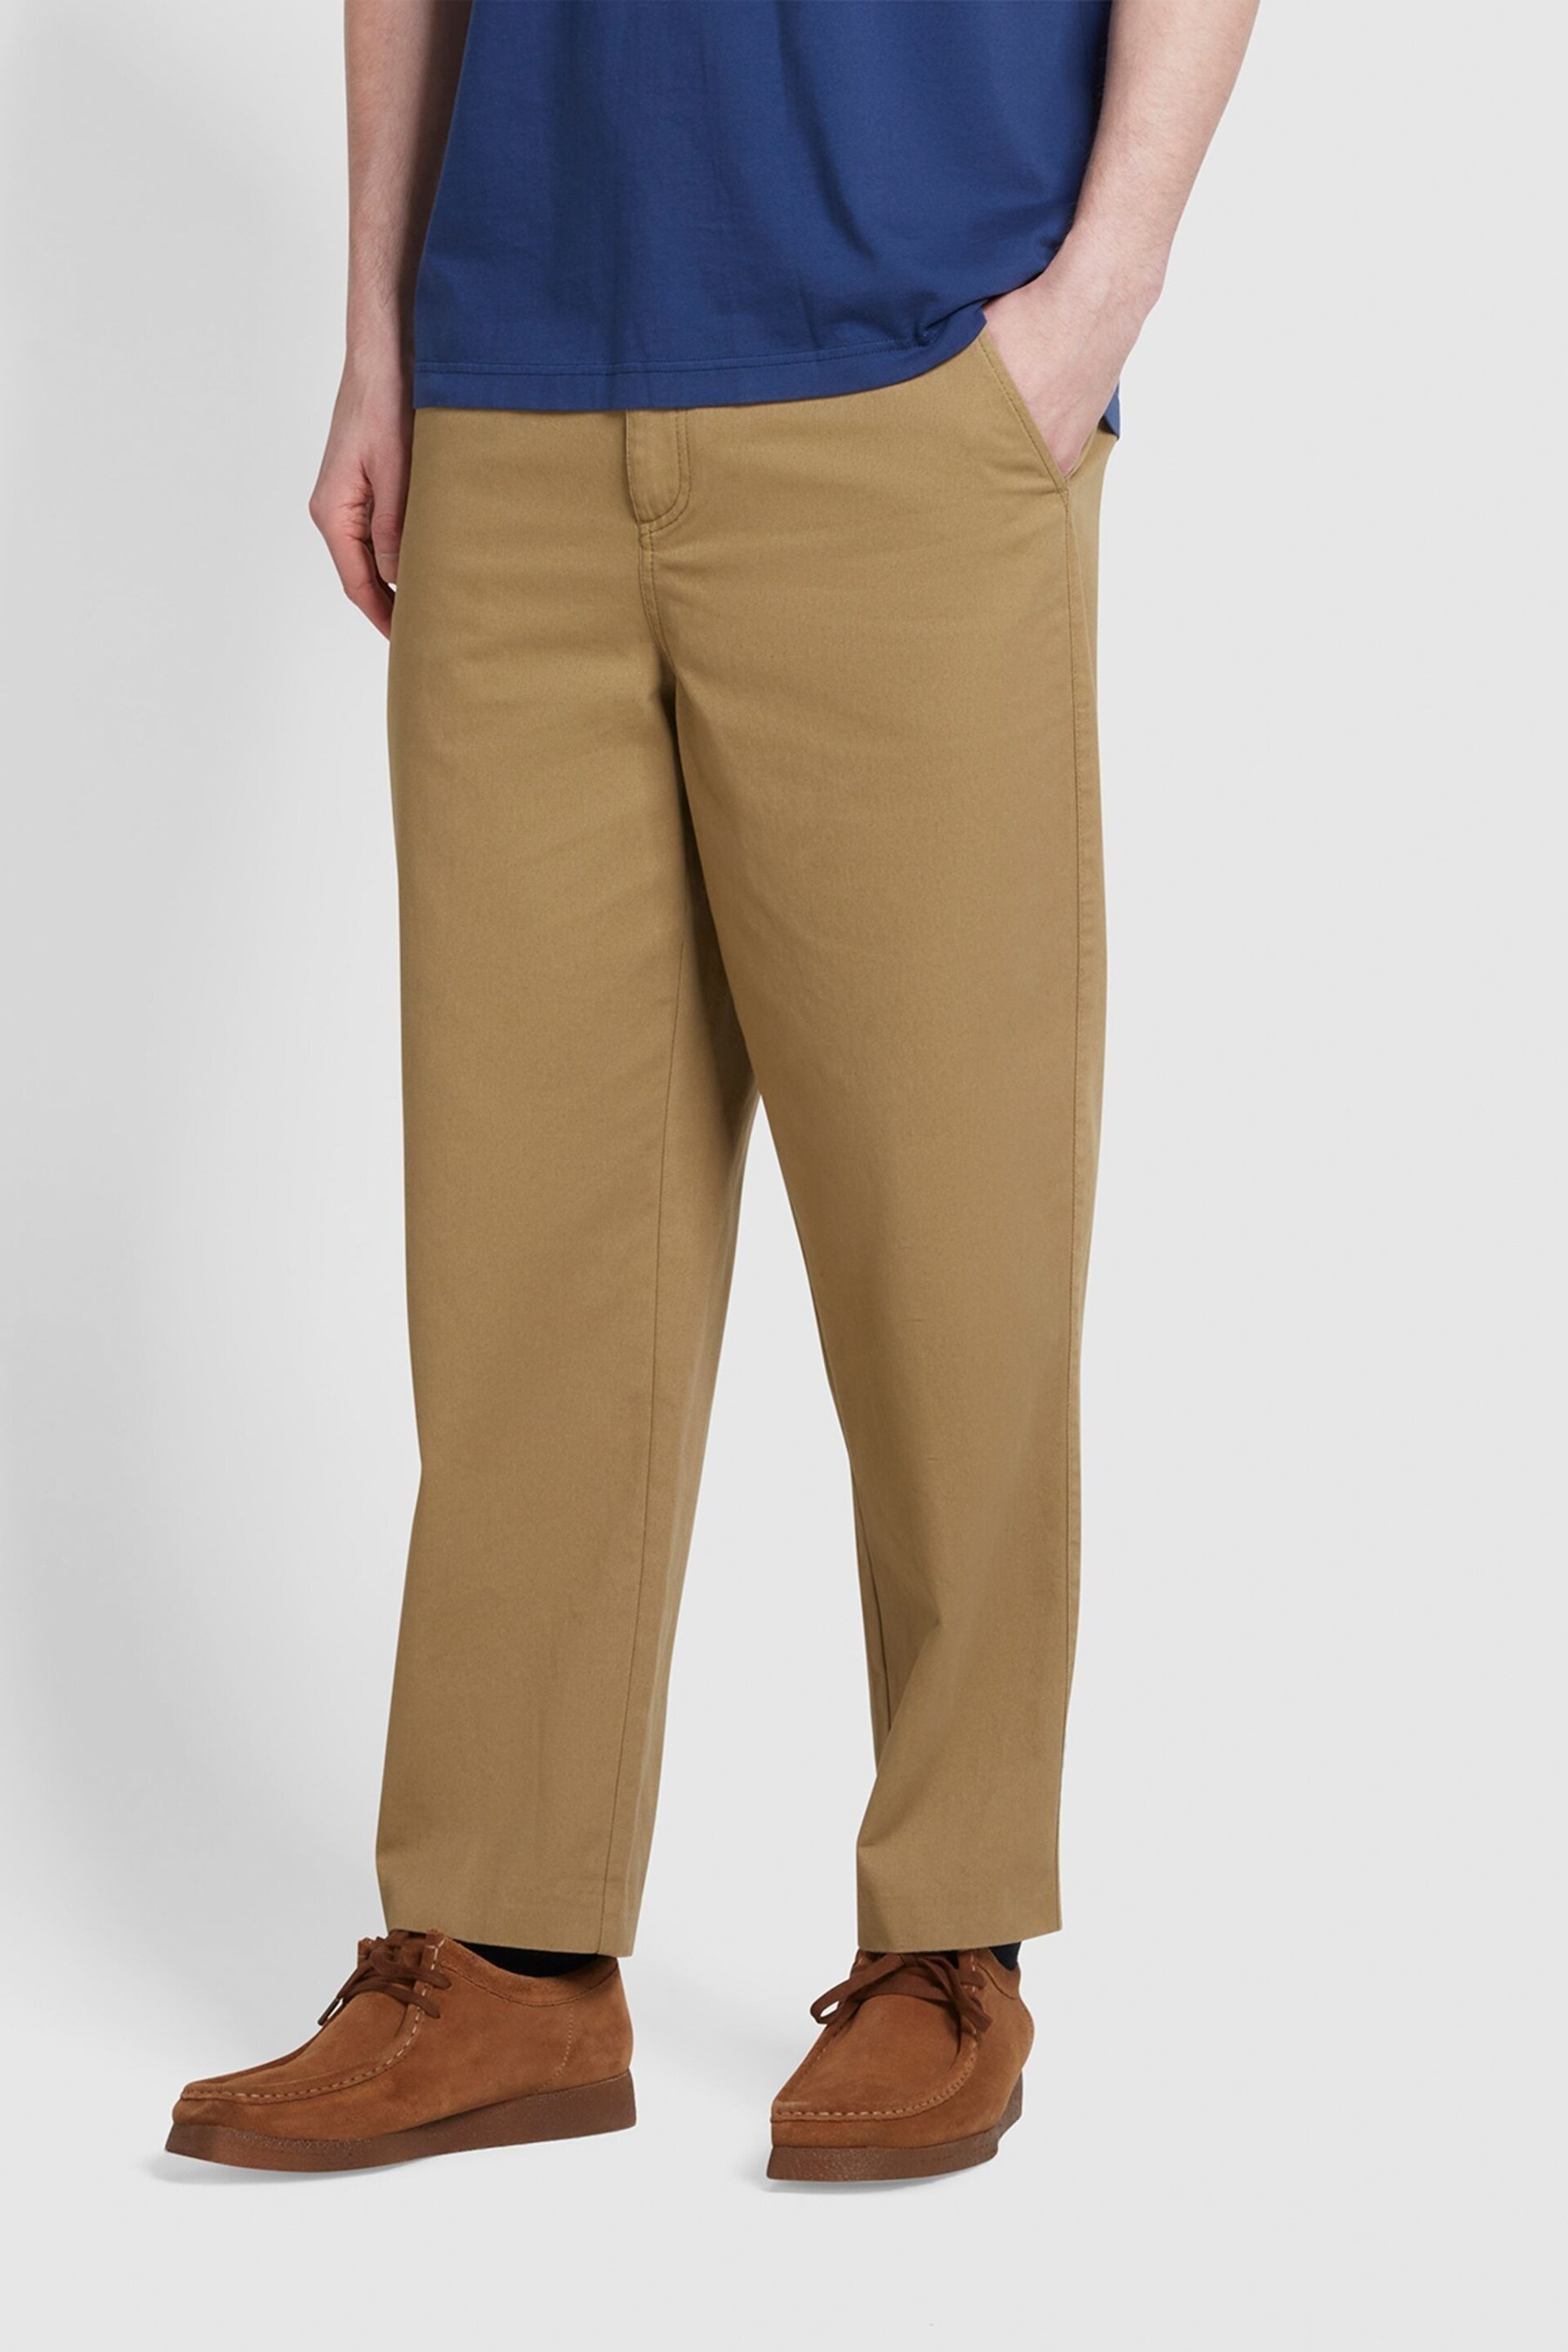 Farah Brown Hawtin Twill Chinos Trousers - Image 1 of 5